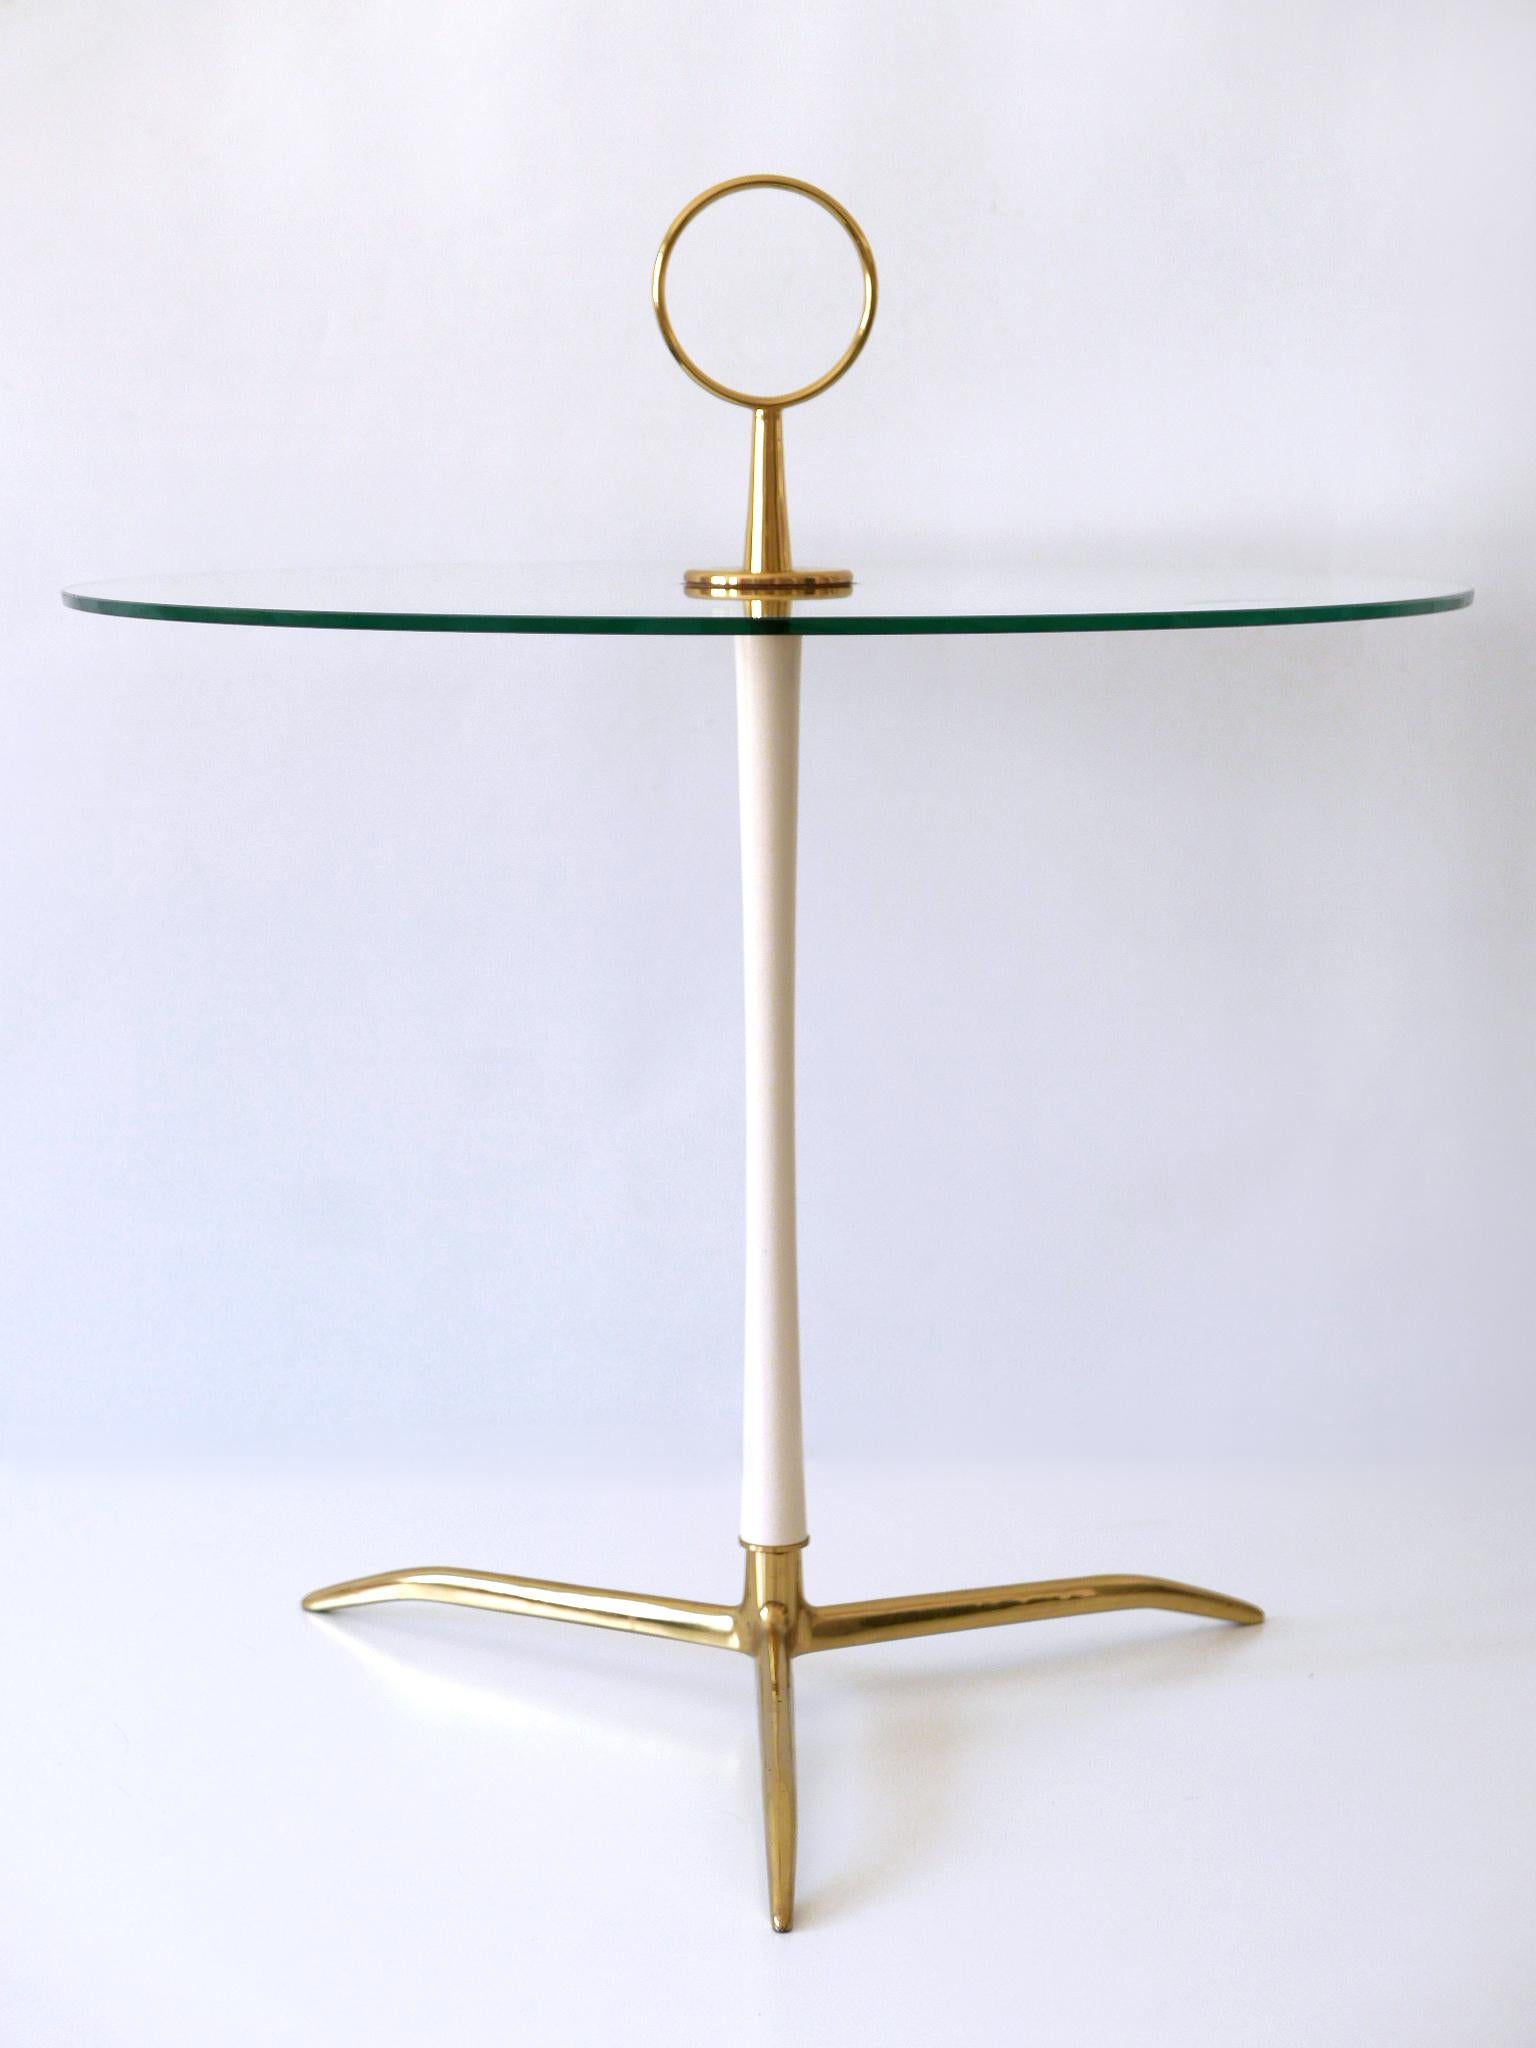 Elegant Mid-Century Modern Side Table by Vereinigte Werkstätten Germany 1950s In Good Condition For Sale In Munich, DE